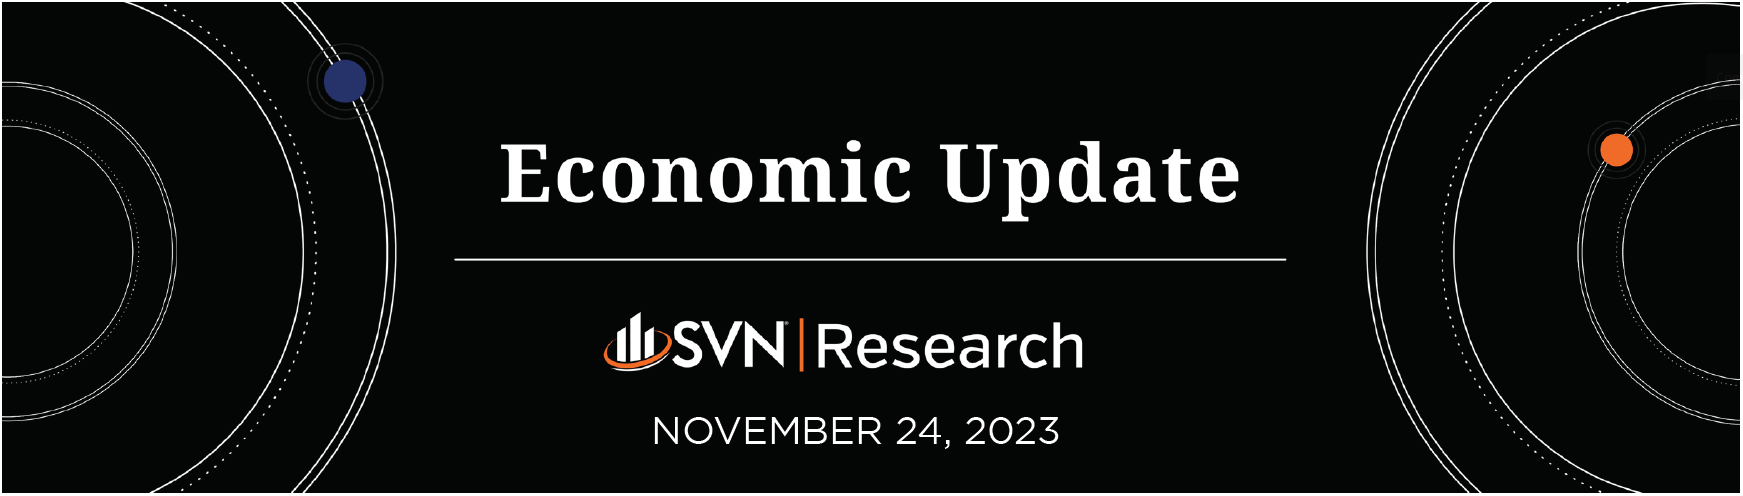 SVN | Research Economic Update 11.24.2023